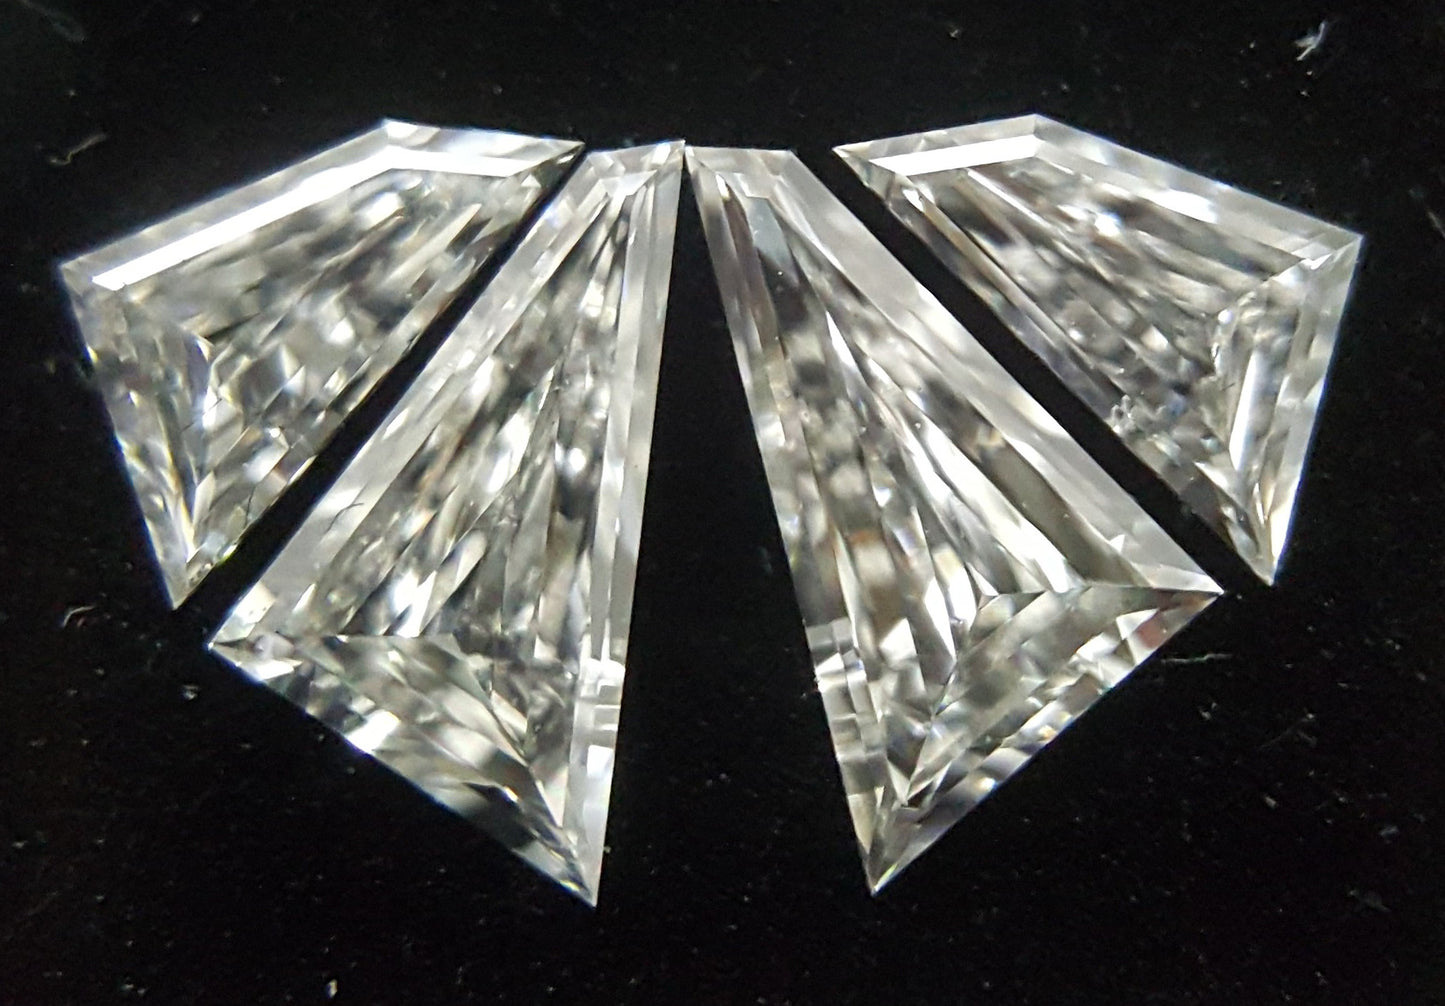 4 Stones=0.44Ct Side Stones Loose Set Mitznft Shape Pairs Natural Diamonds H | VVS